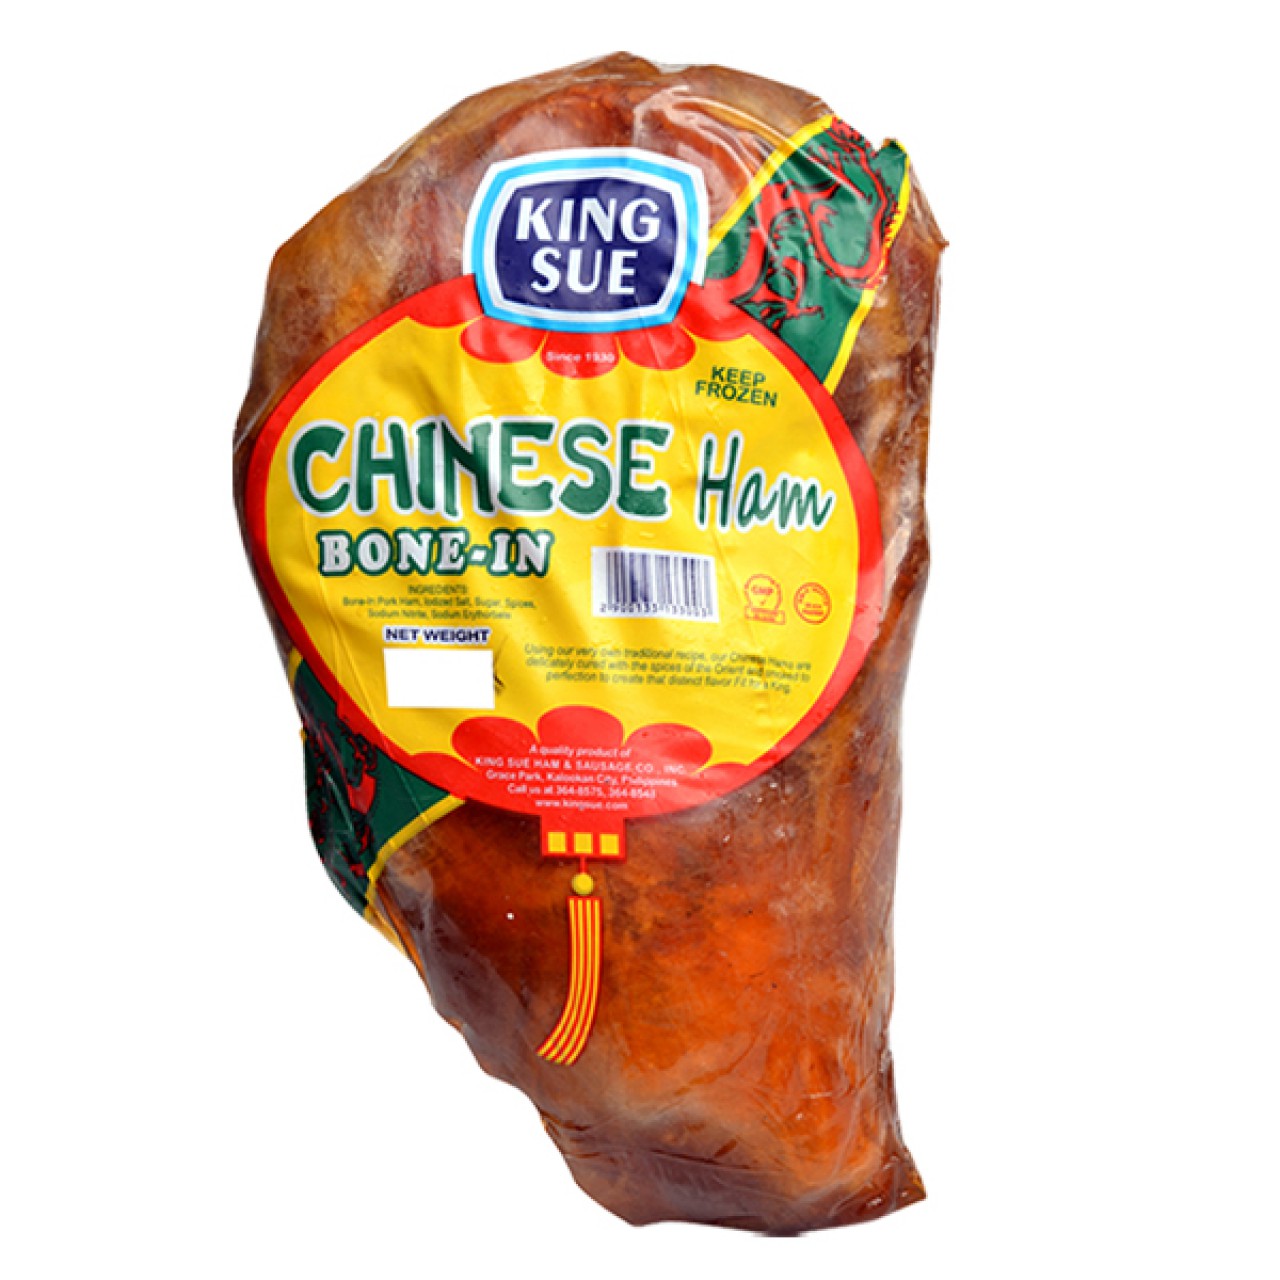 CHINESE HAM (Bone-In) Boiled